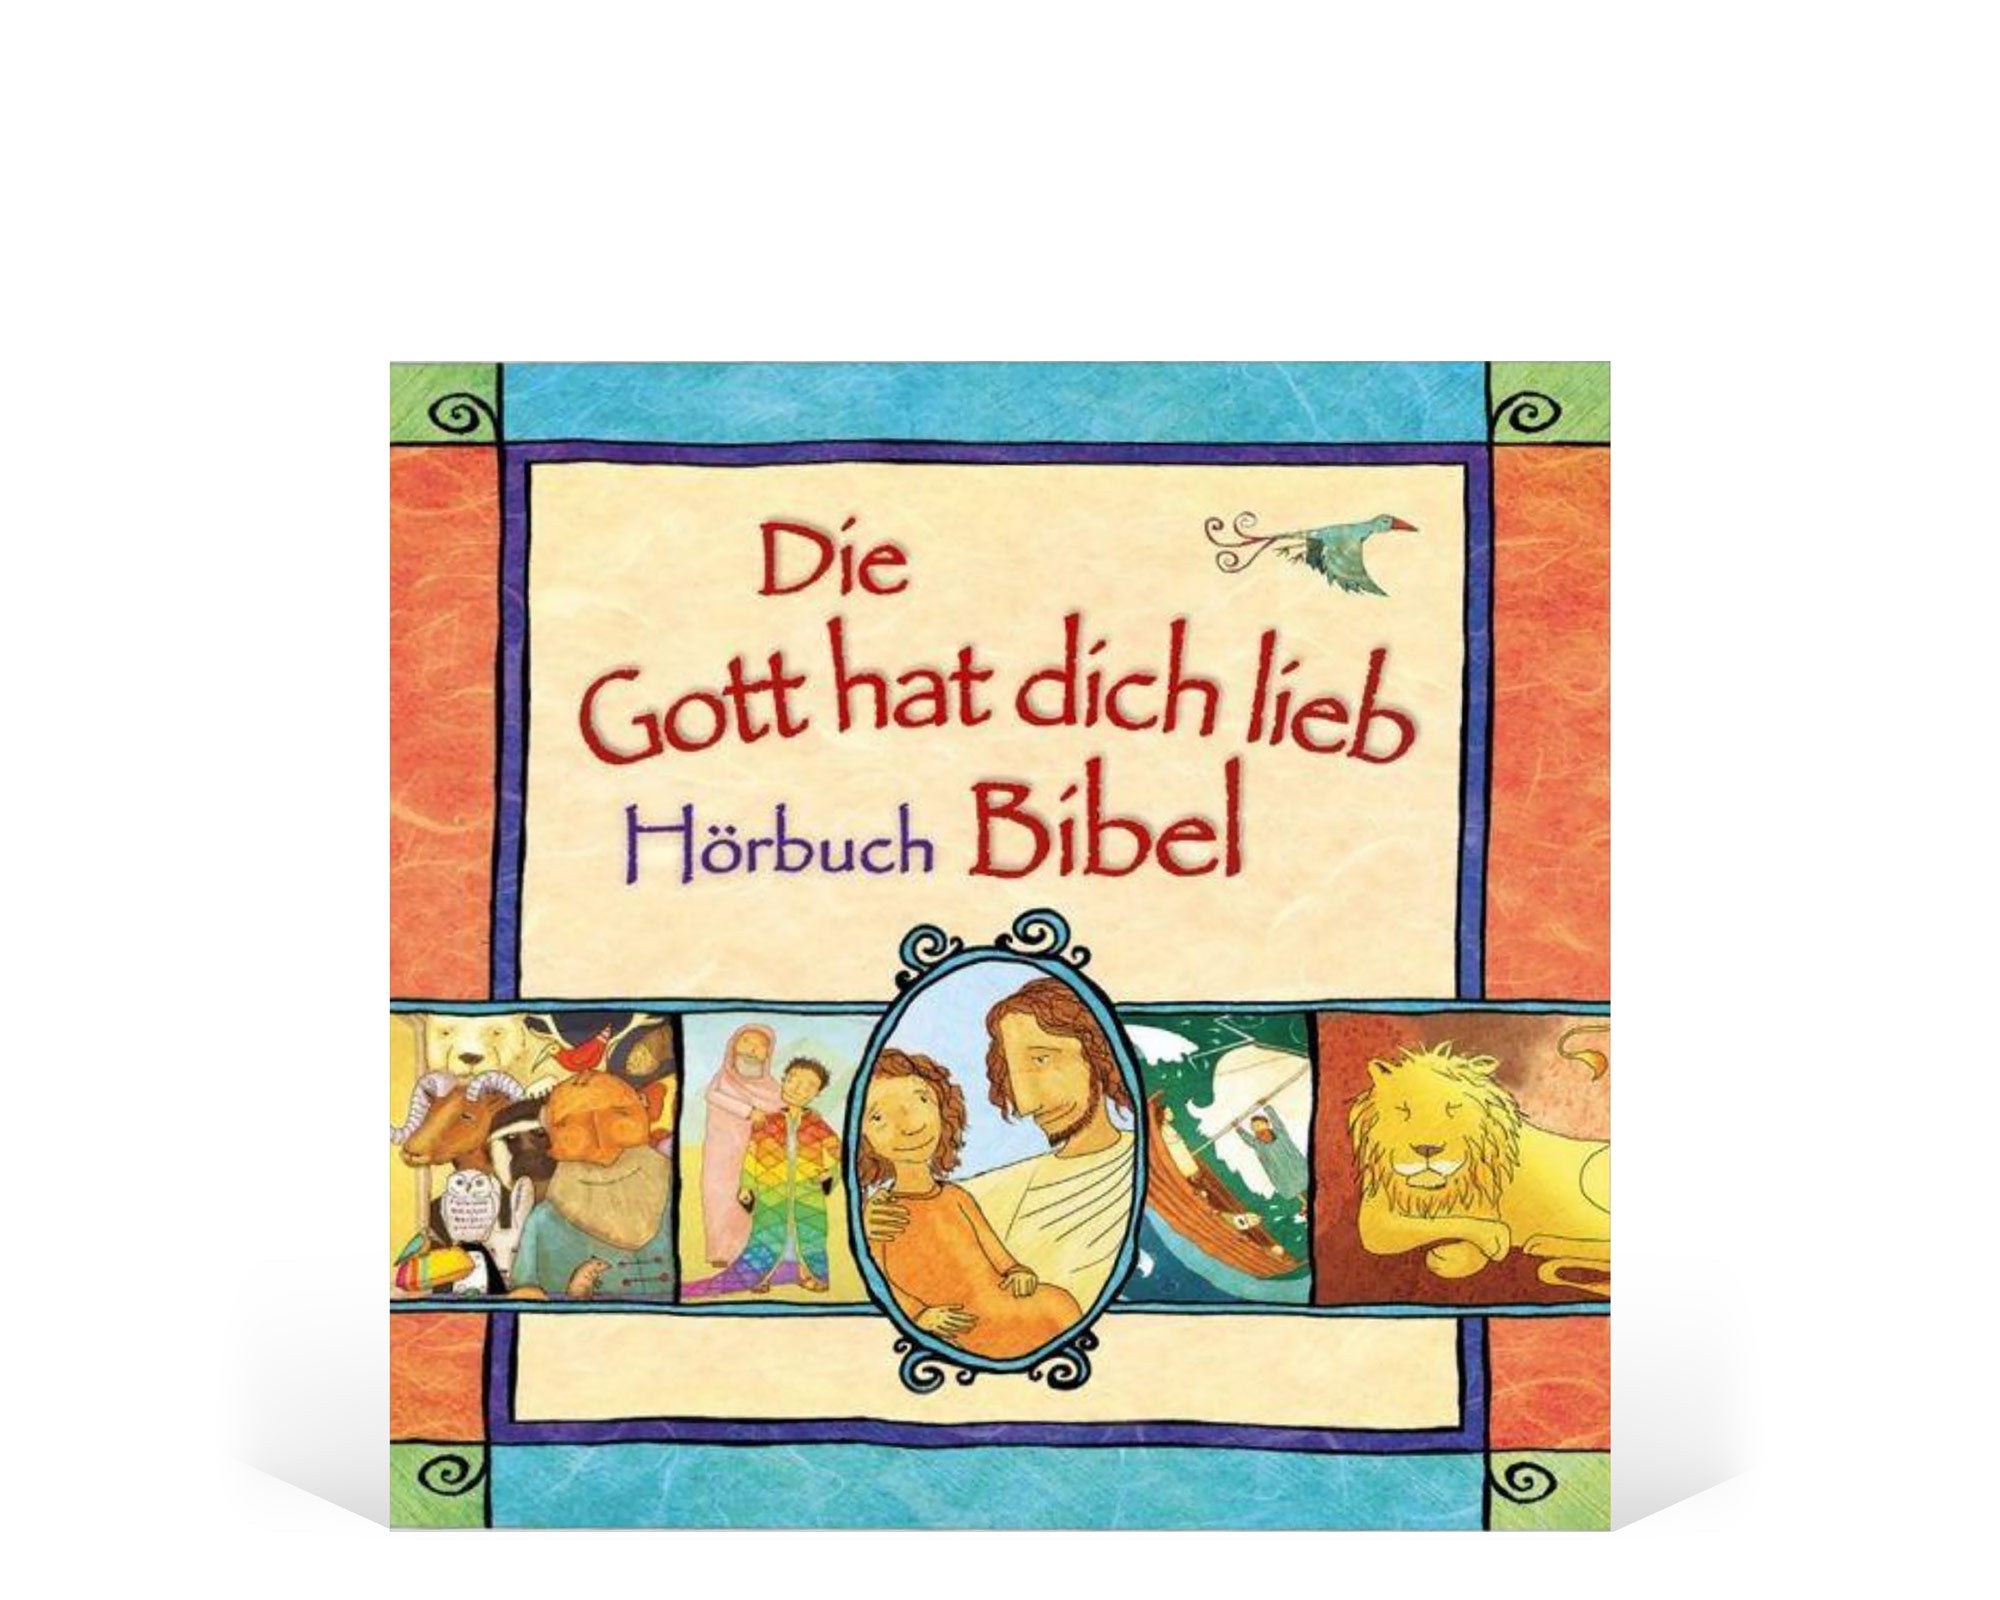 Die Gott hat dich lieb Hörbuch-Bibel